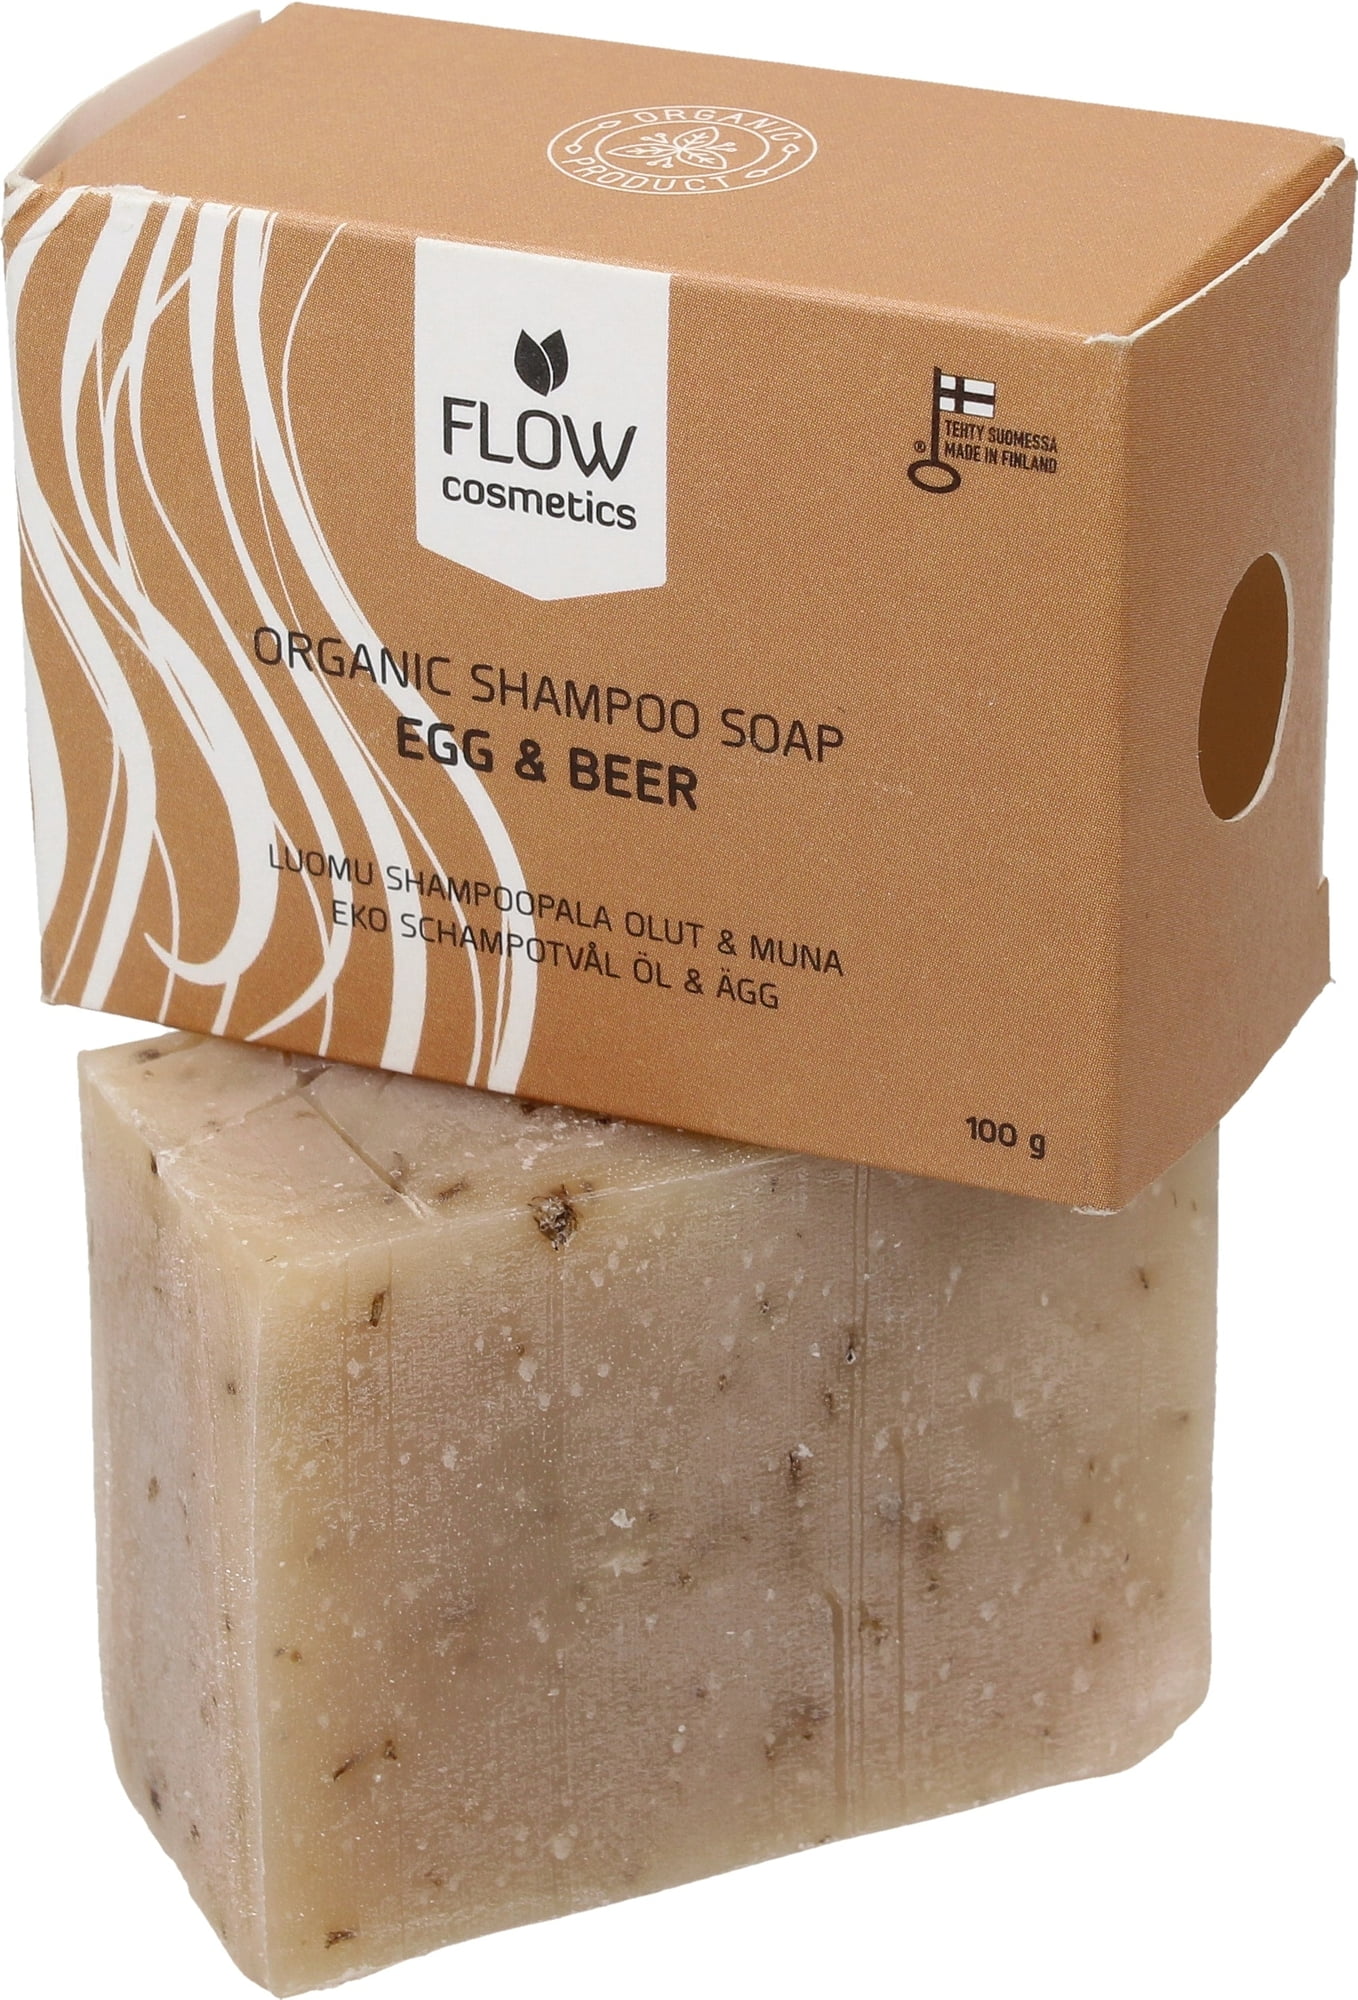 FLOW cosmetics Shampoo Soap Bar Beer & Egg